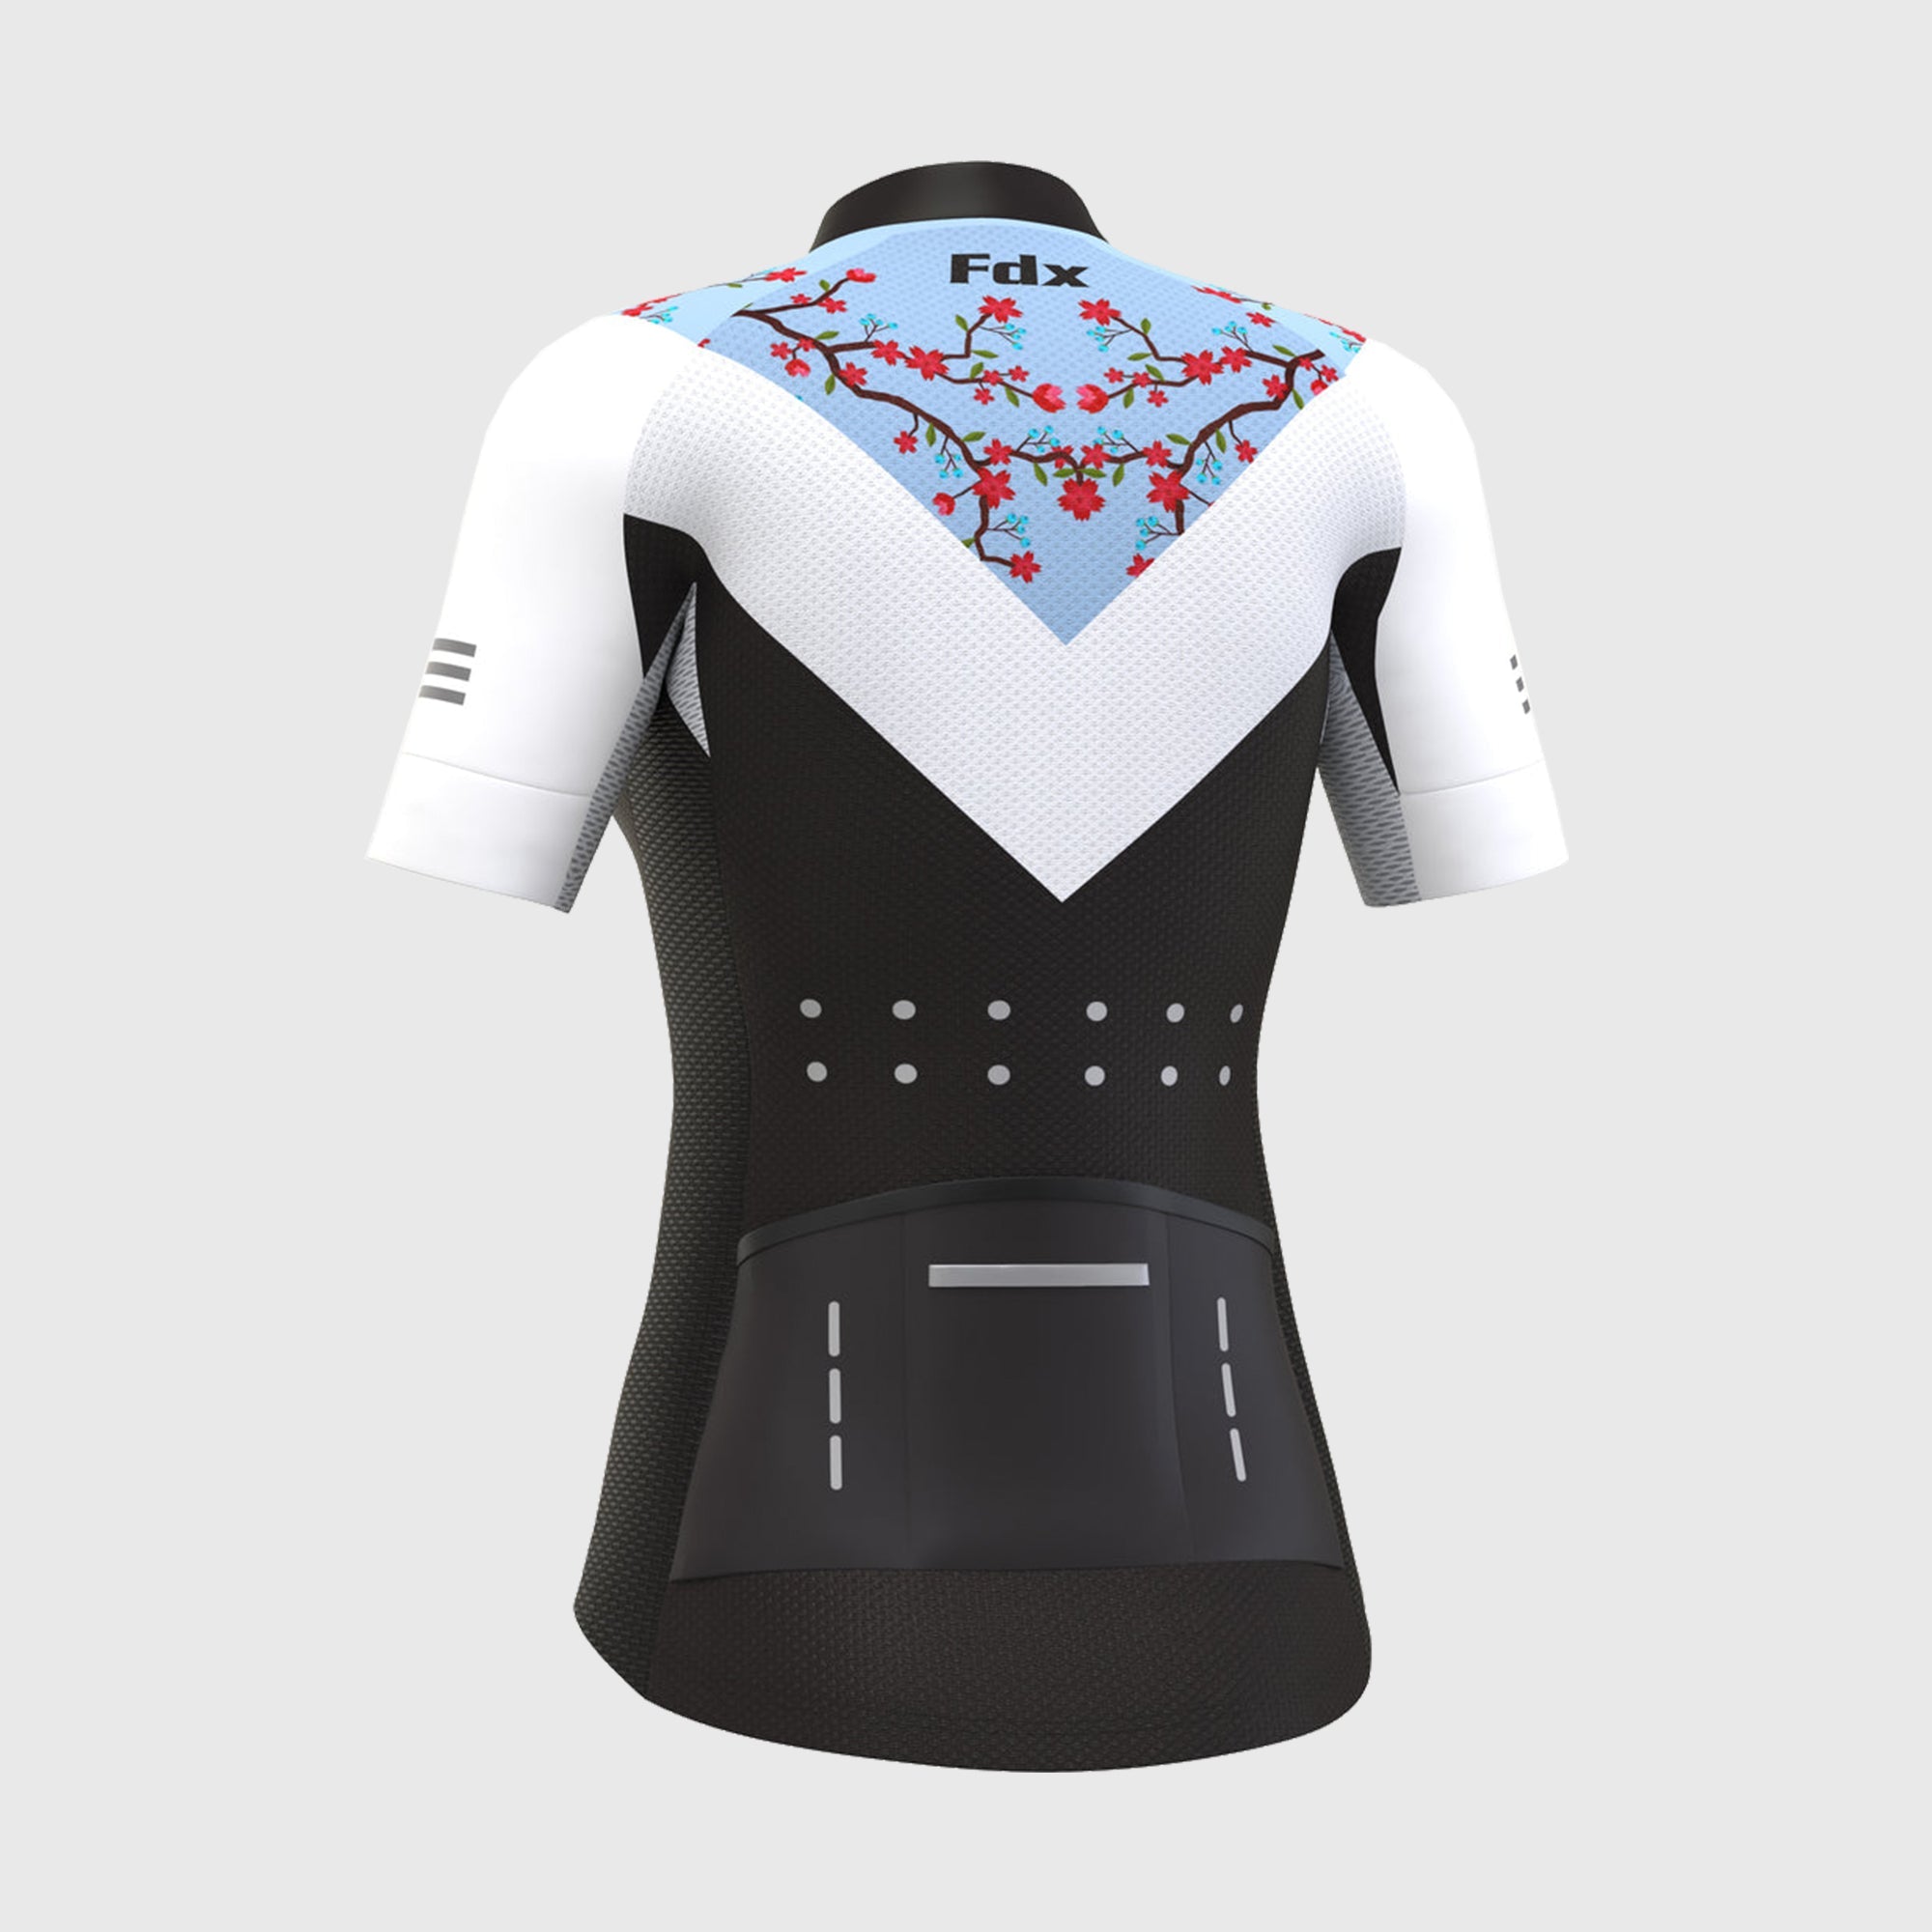 FDX Women's Black, White & Blue Short Sleeve Best Cycling Jersey & Breathable Mesh Bib Short Reflective Details 3D Cushion Pad Lightweight 